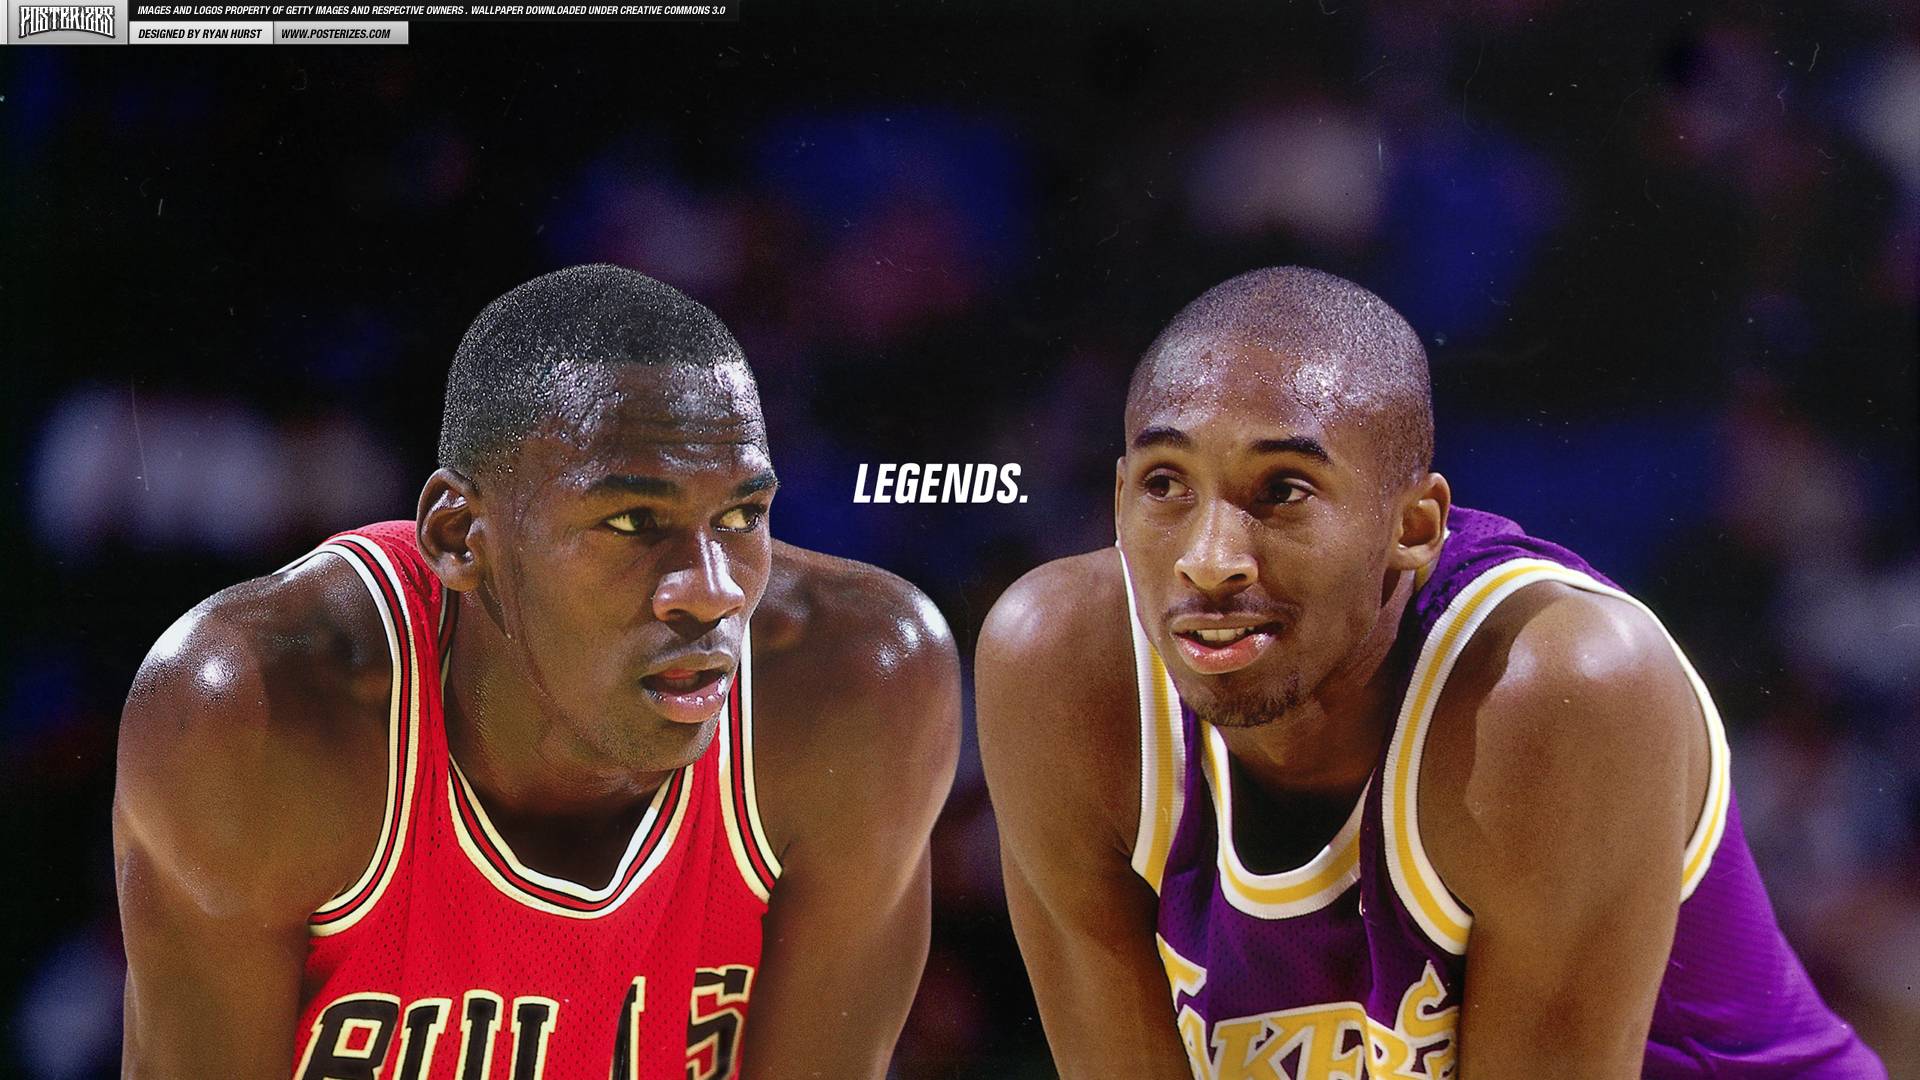 Kobe Bryant & Michael Jordan “Legends” Posterizes Wallpaper